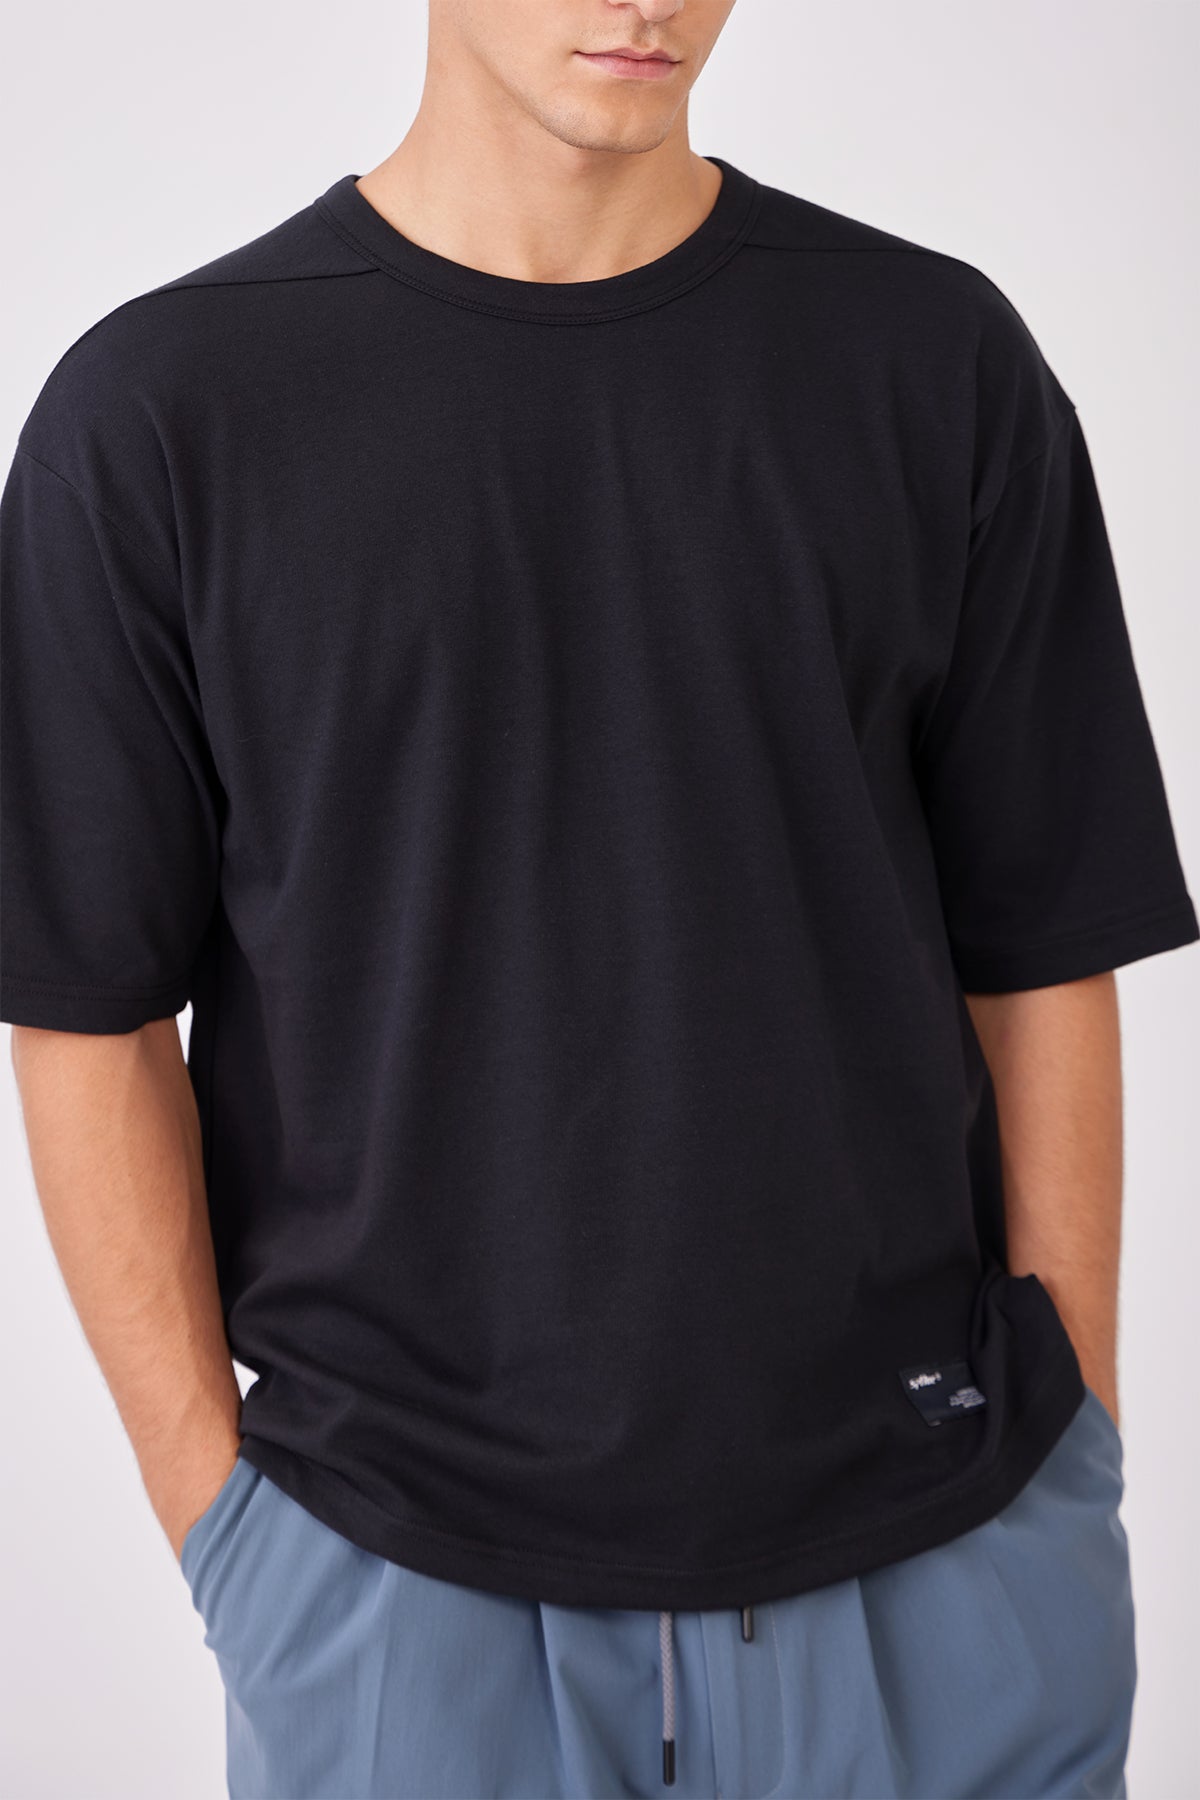 Black Classic Inverse T-Shirt